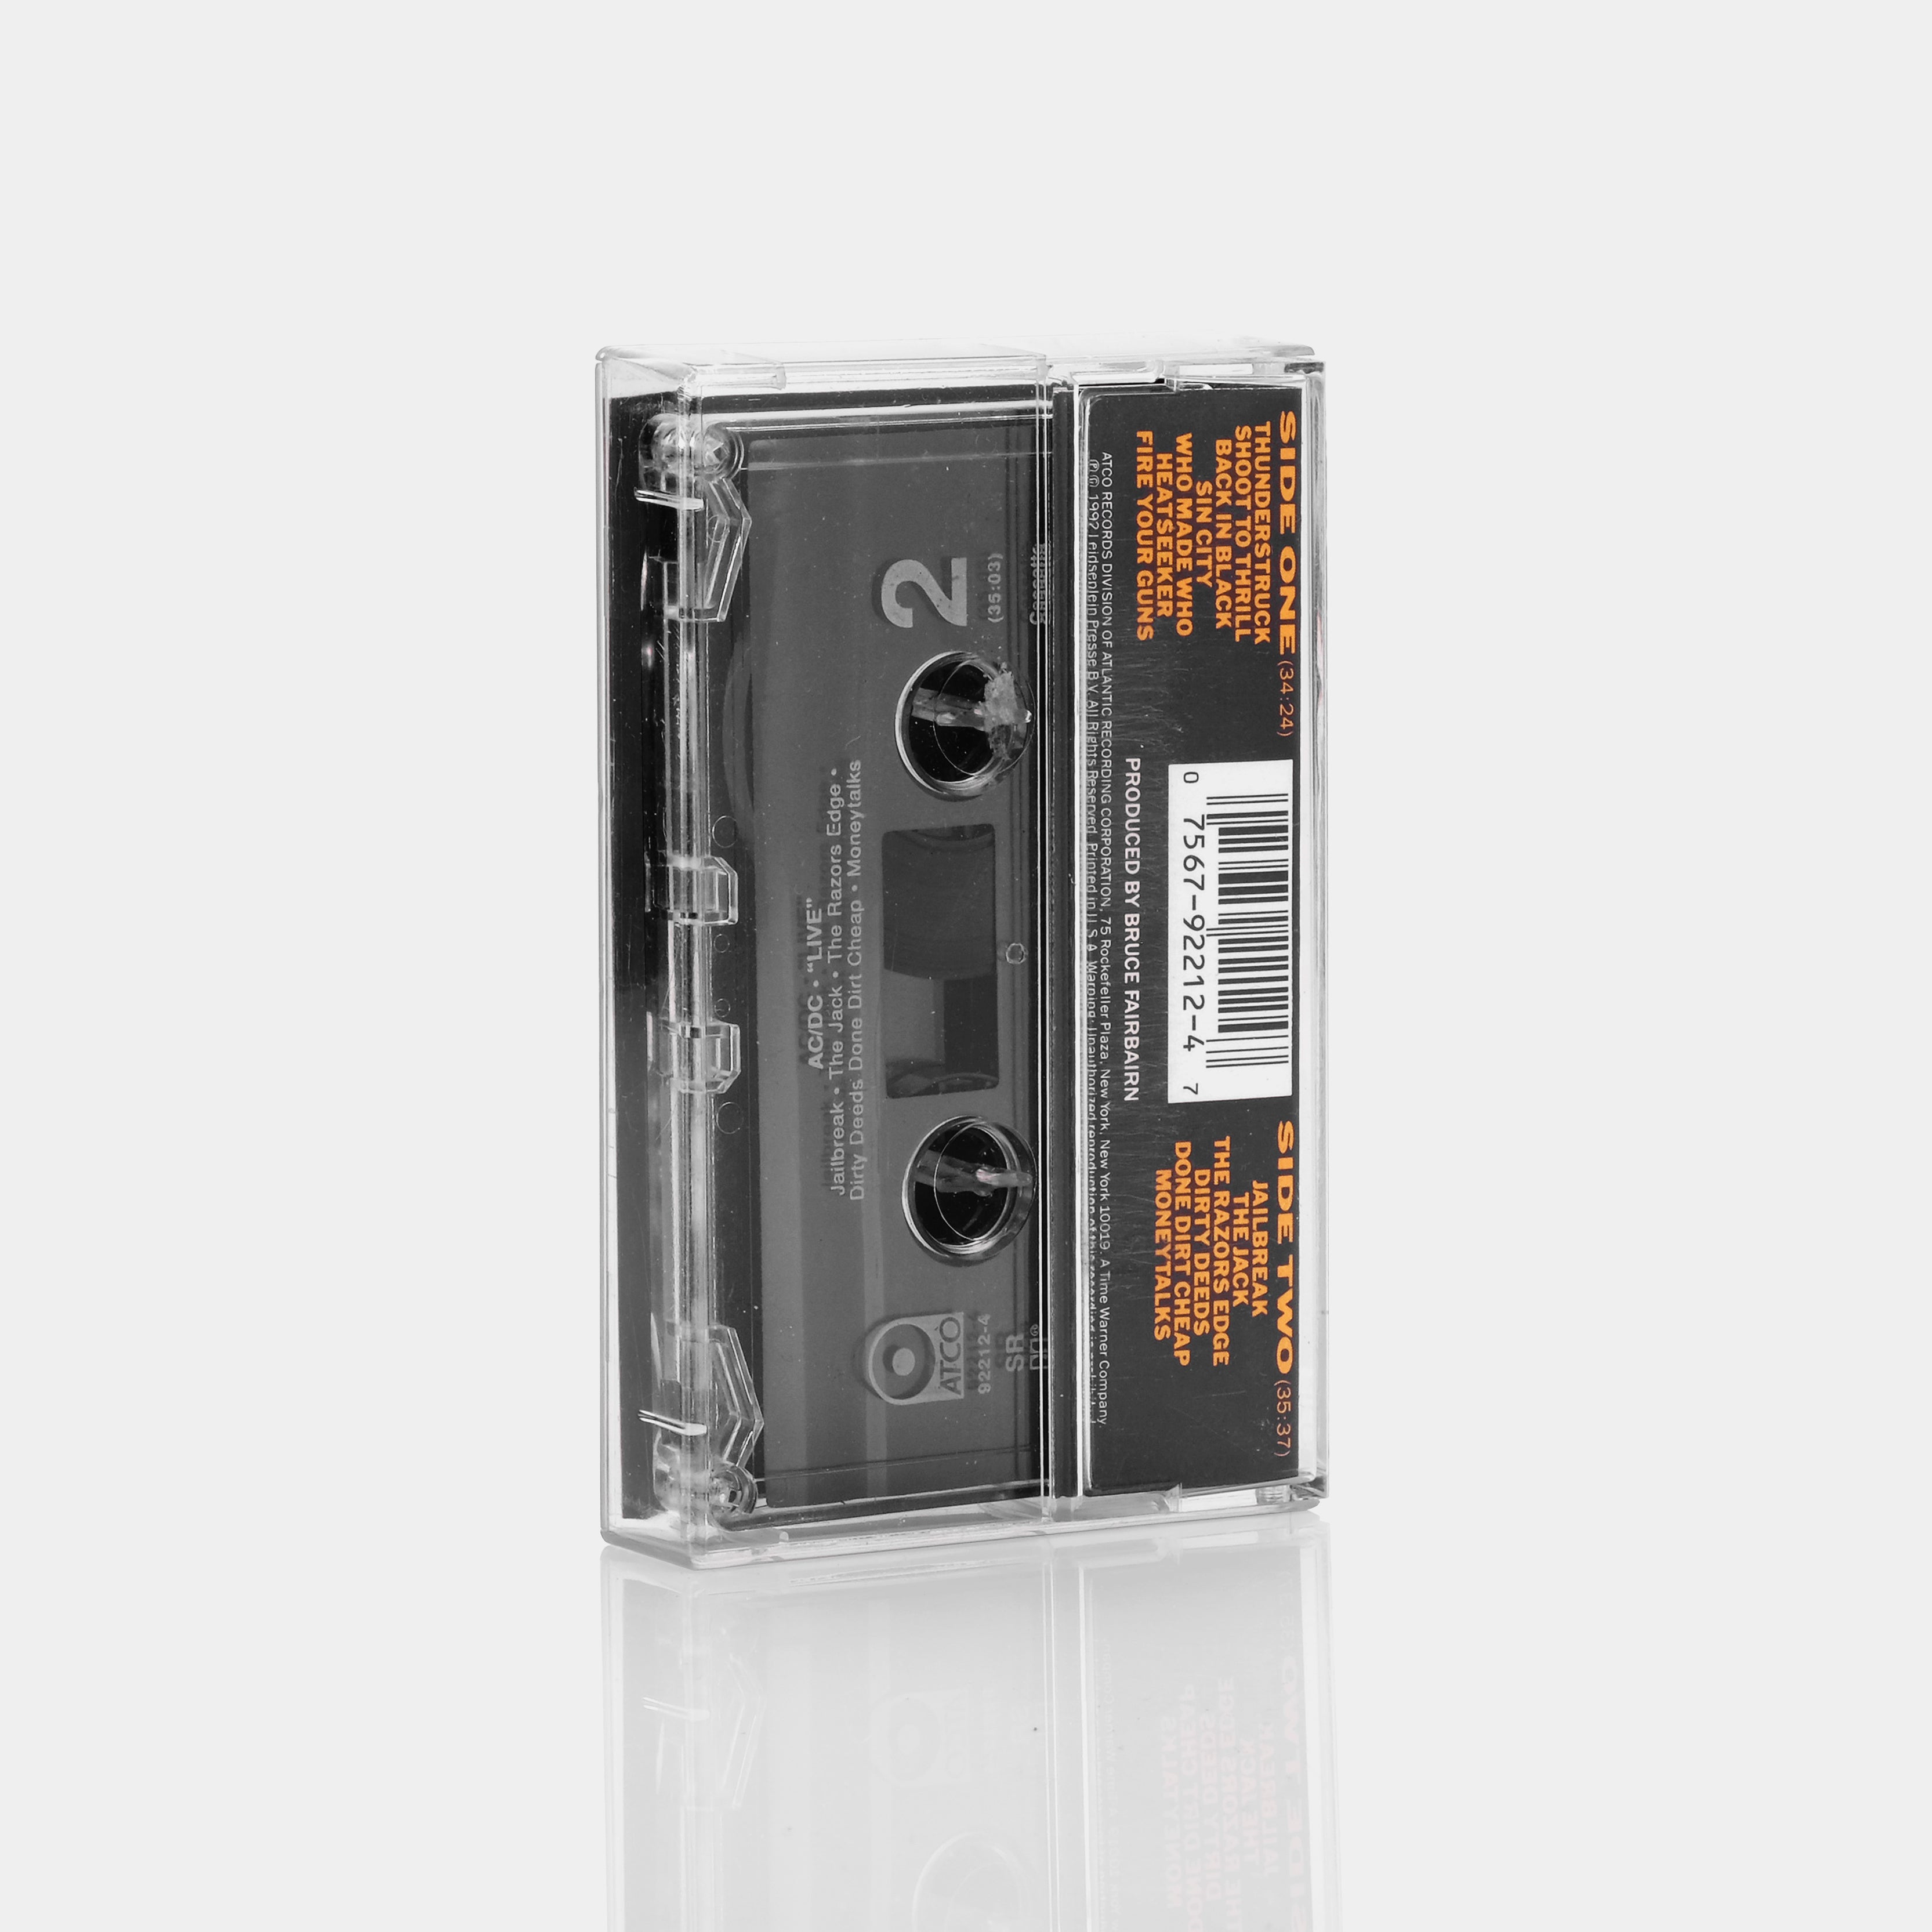 AC/DC - Live Cassette Tape